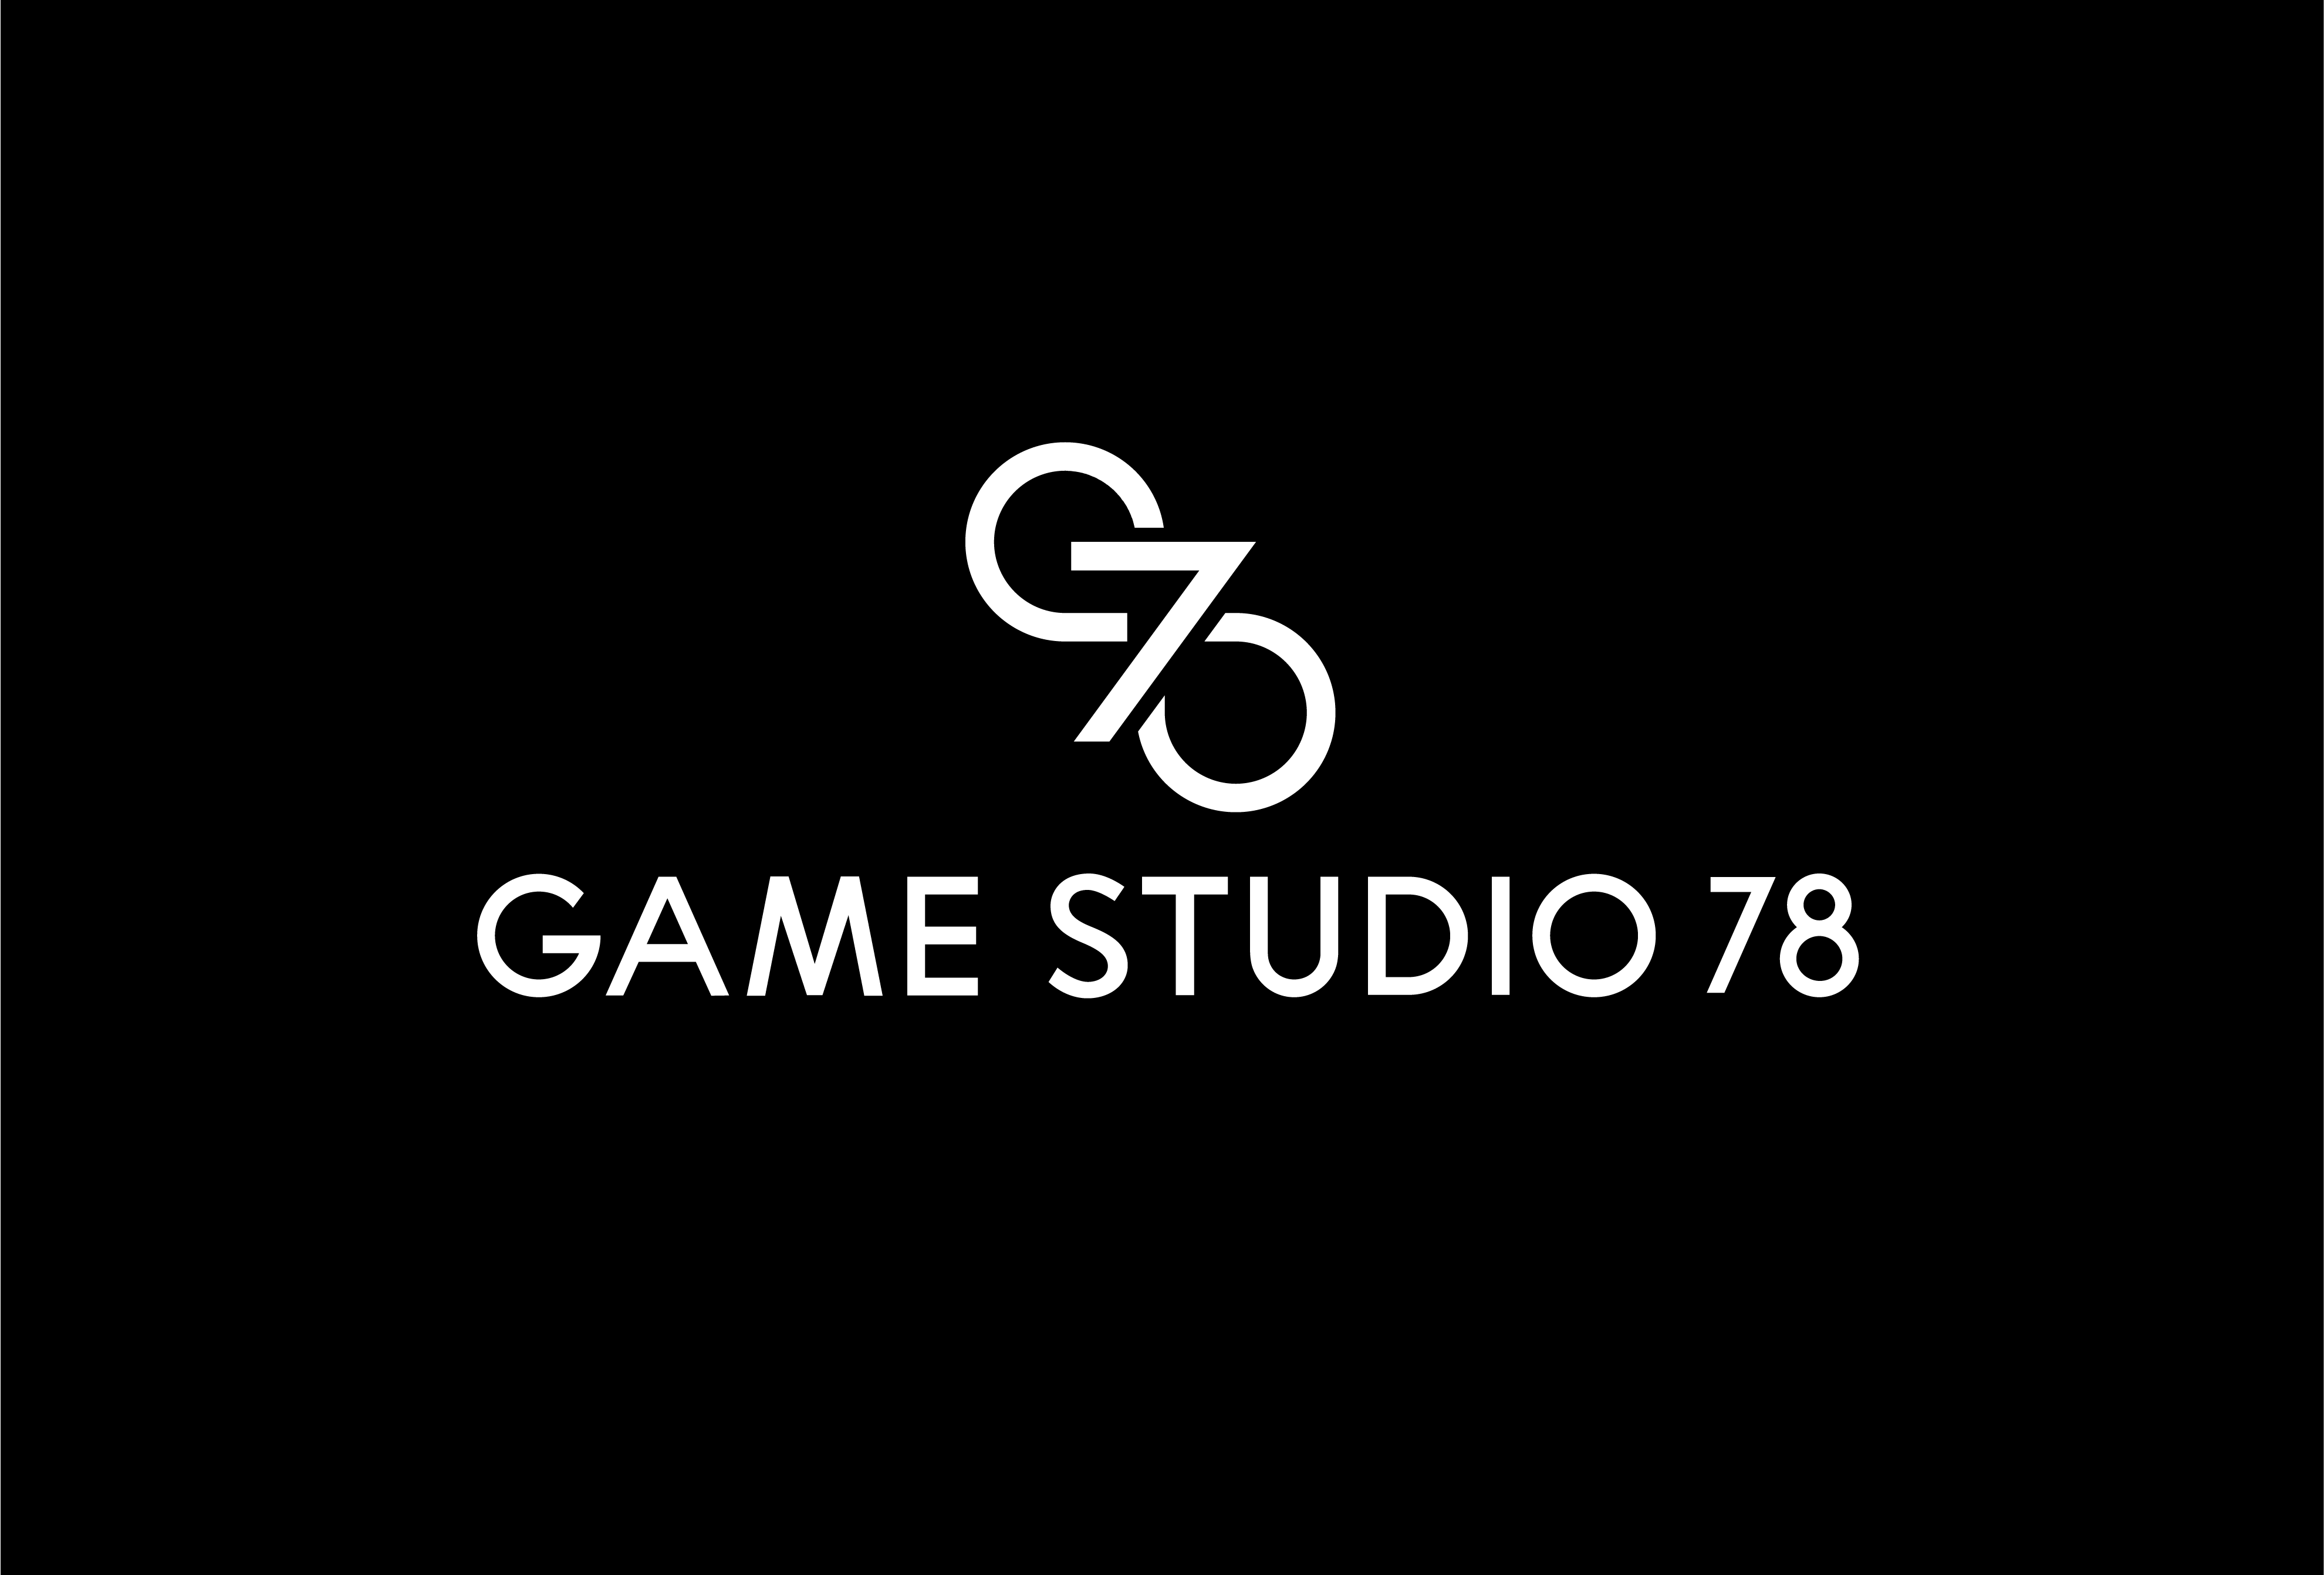 Логотипы гейм студий. Игры Studios. Логотипы инди студий. Game Studio. Game studio 3